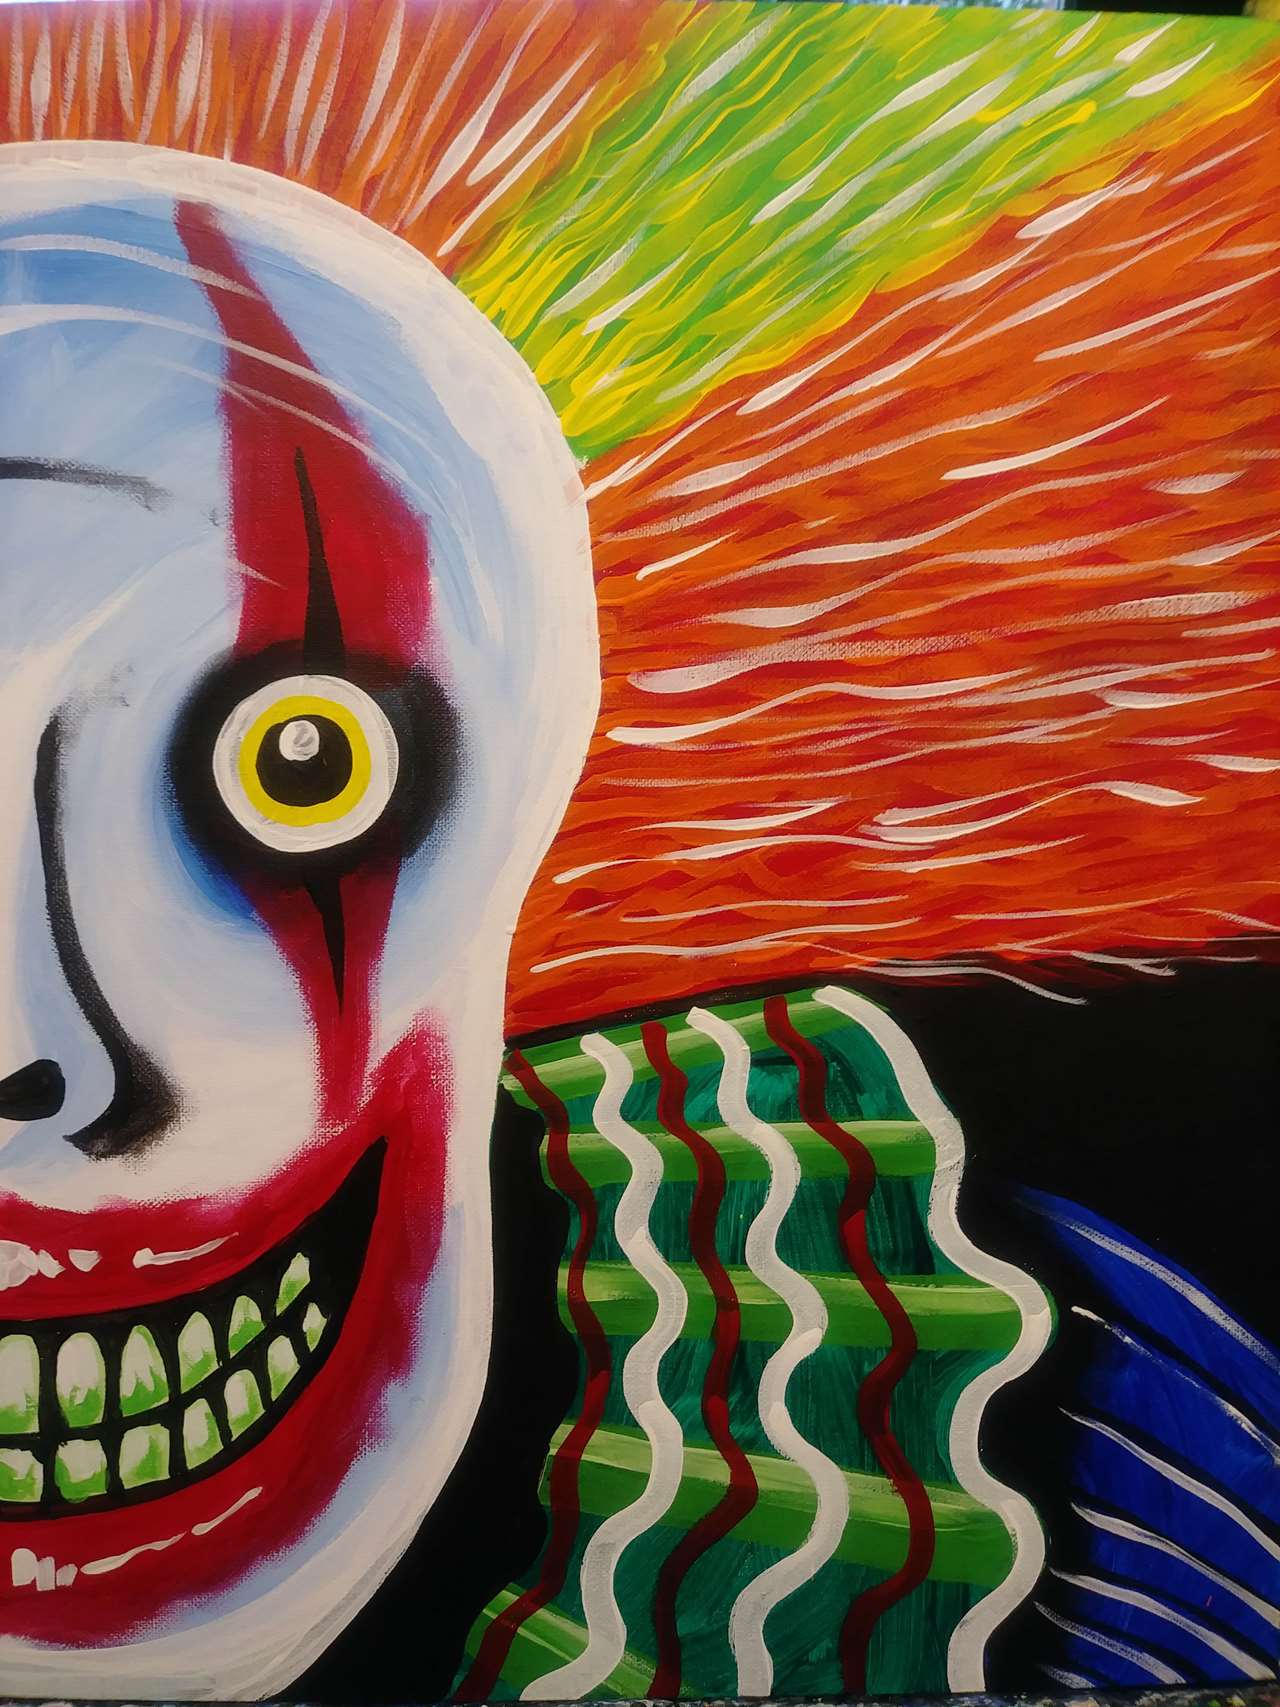 Creepy Clown - Tue, Oct 31 8PM at Park Cities